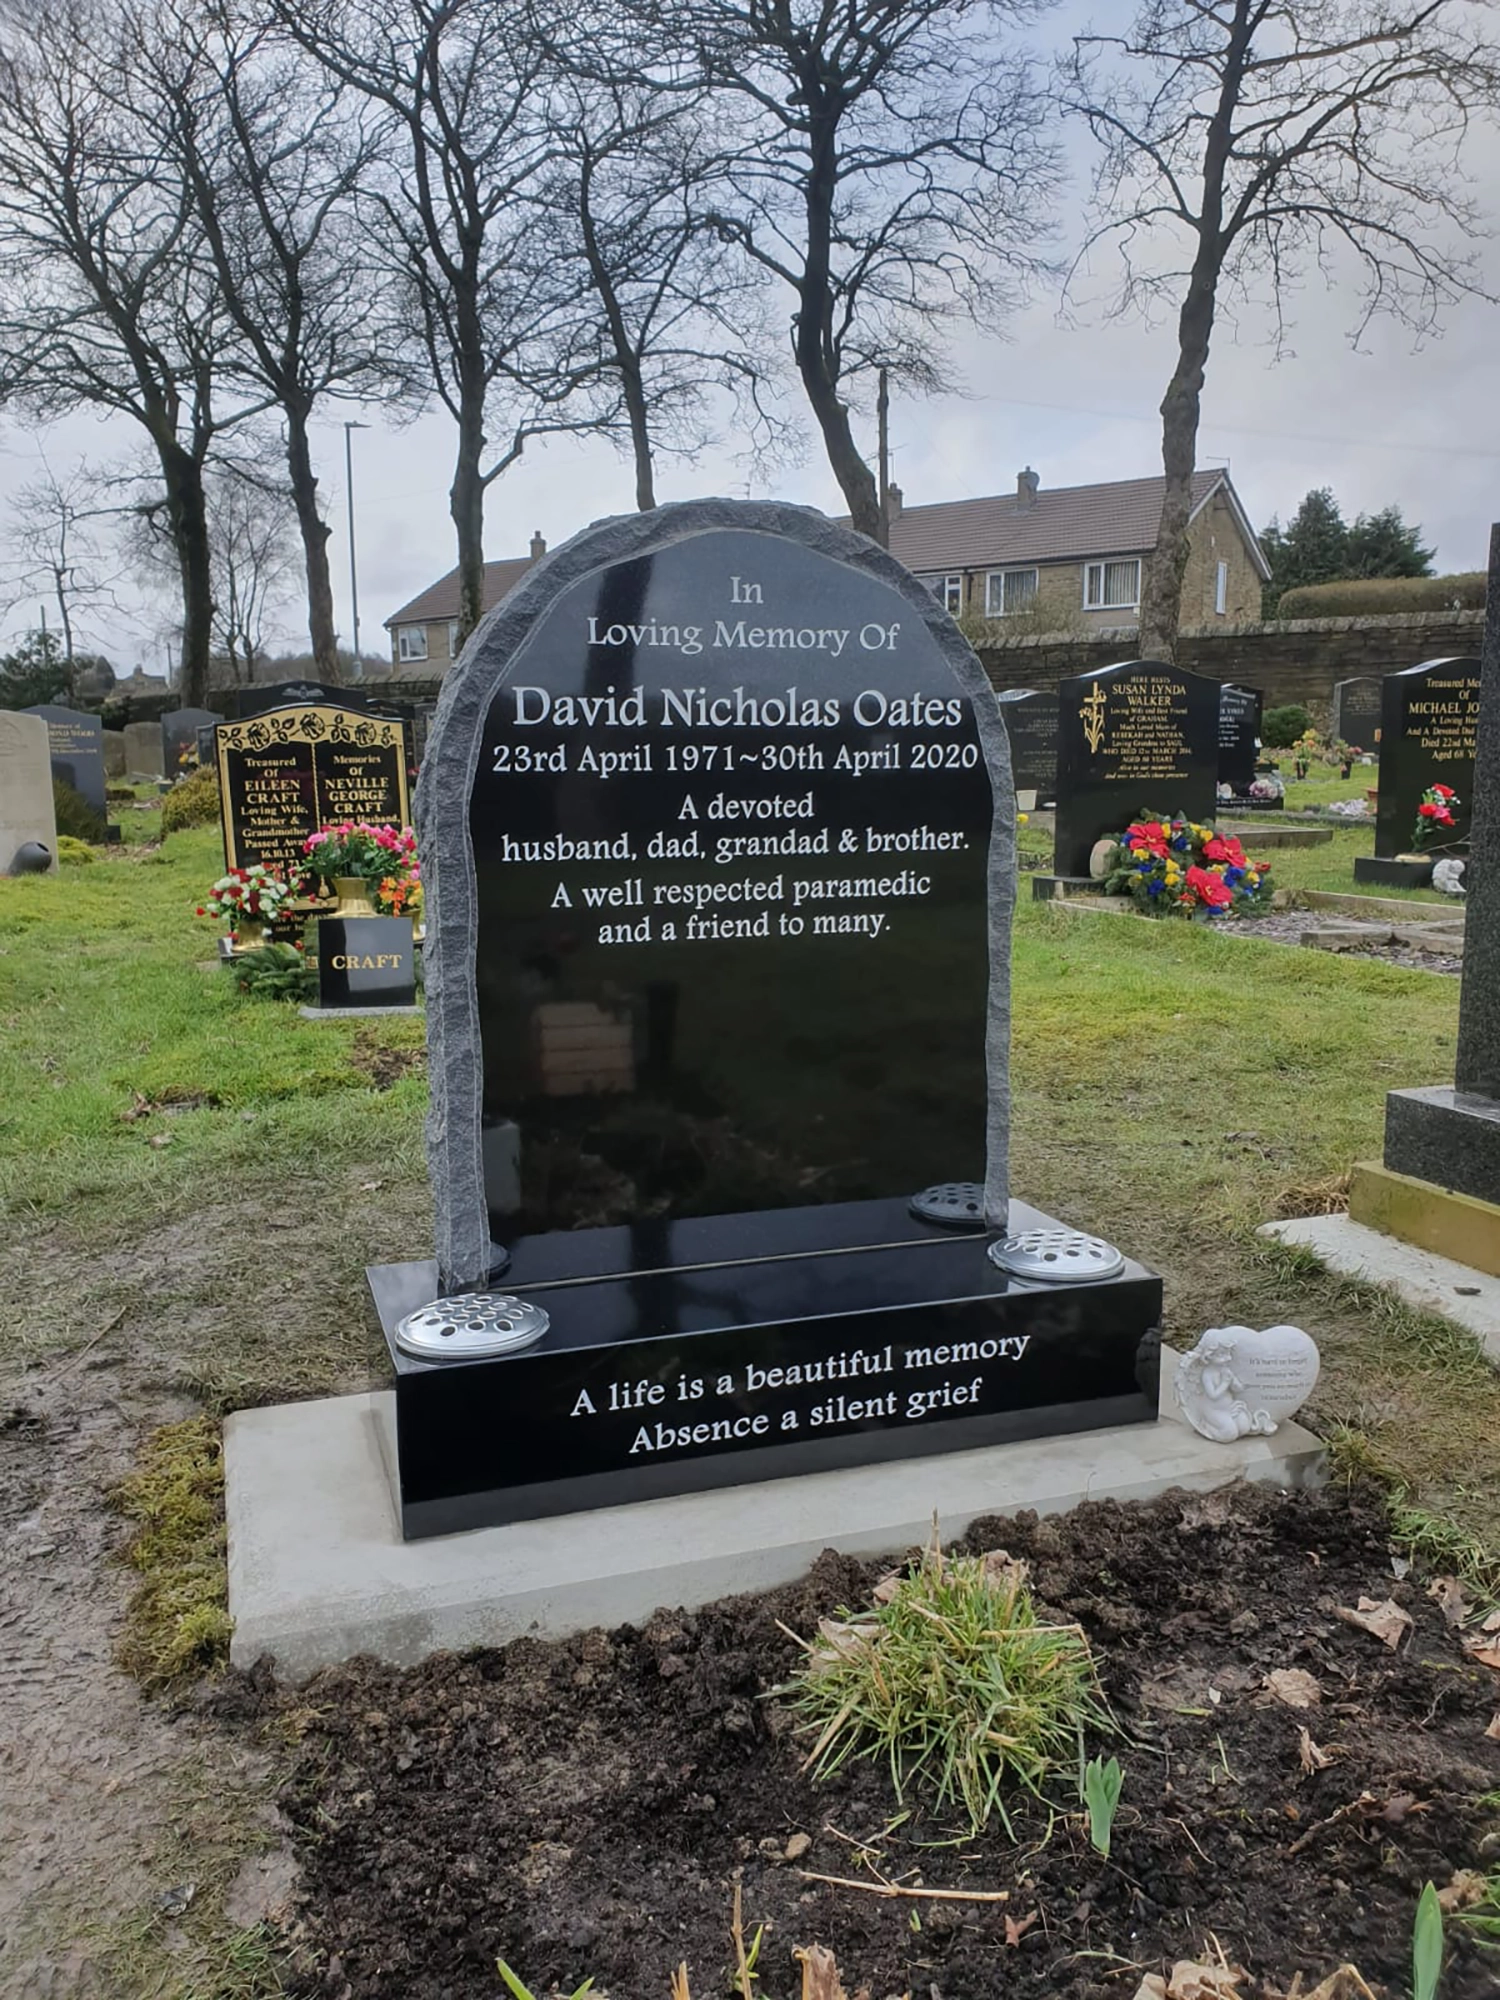 Headstone, Gravestones, and Memorials in Yorkshire by Northern Headstones